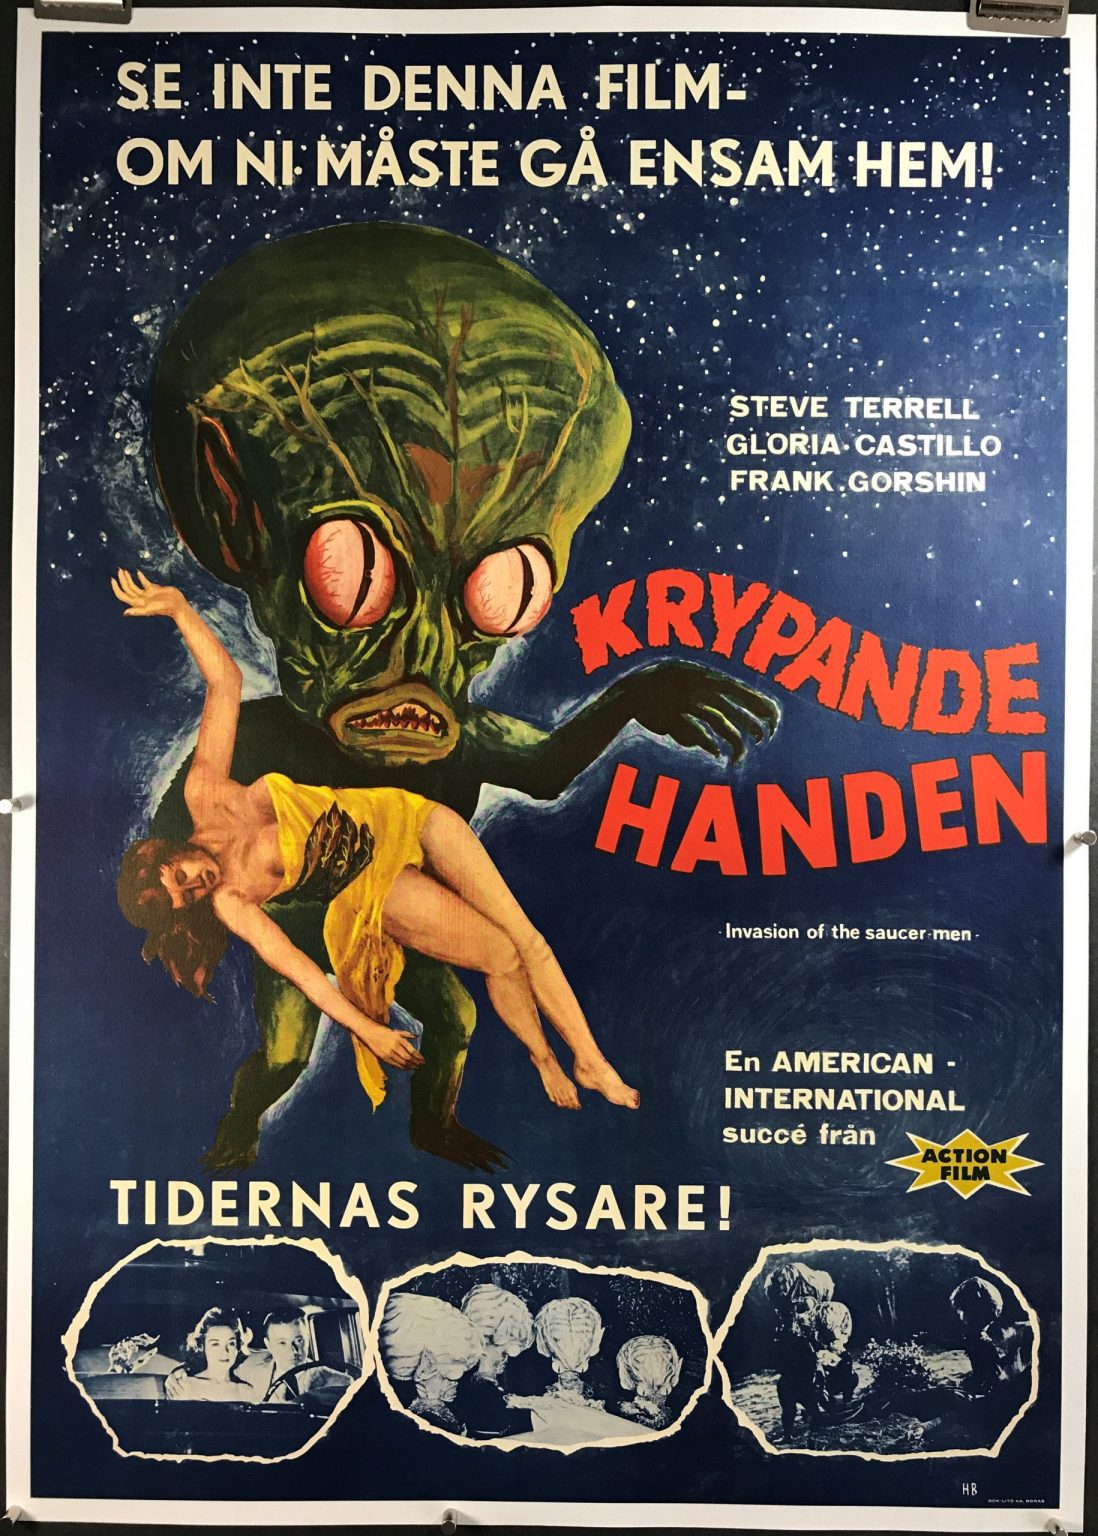 scary movie alien invasion